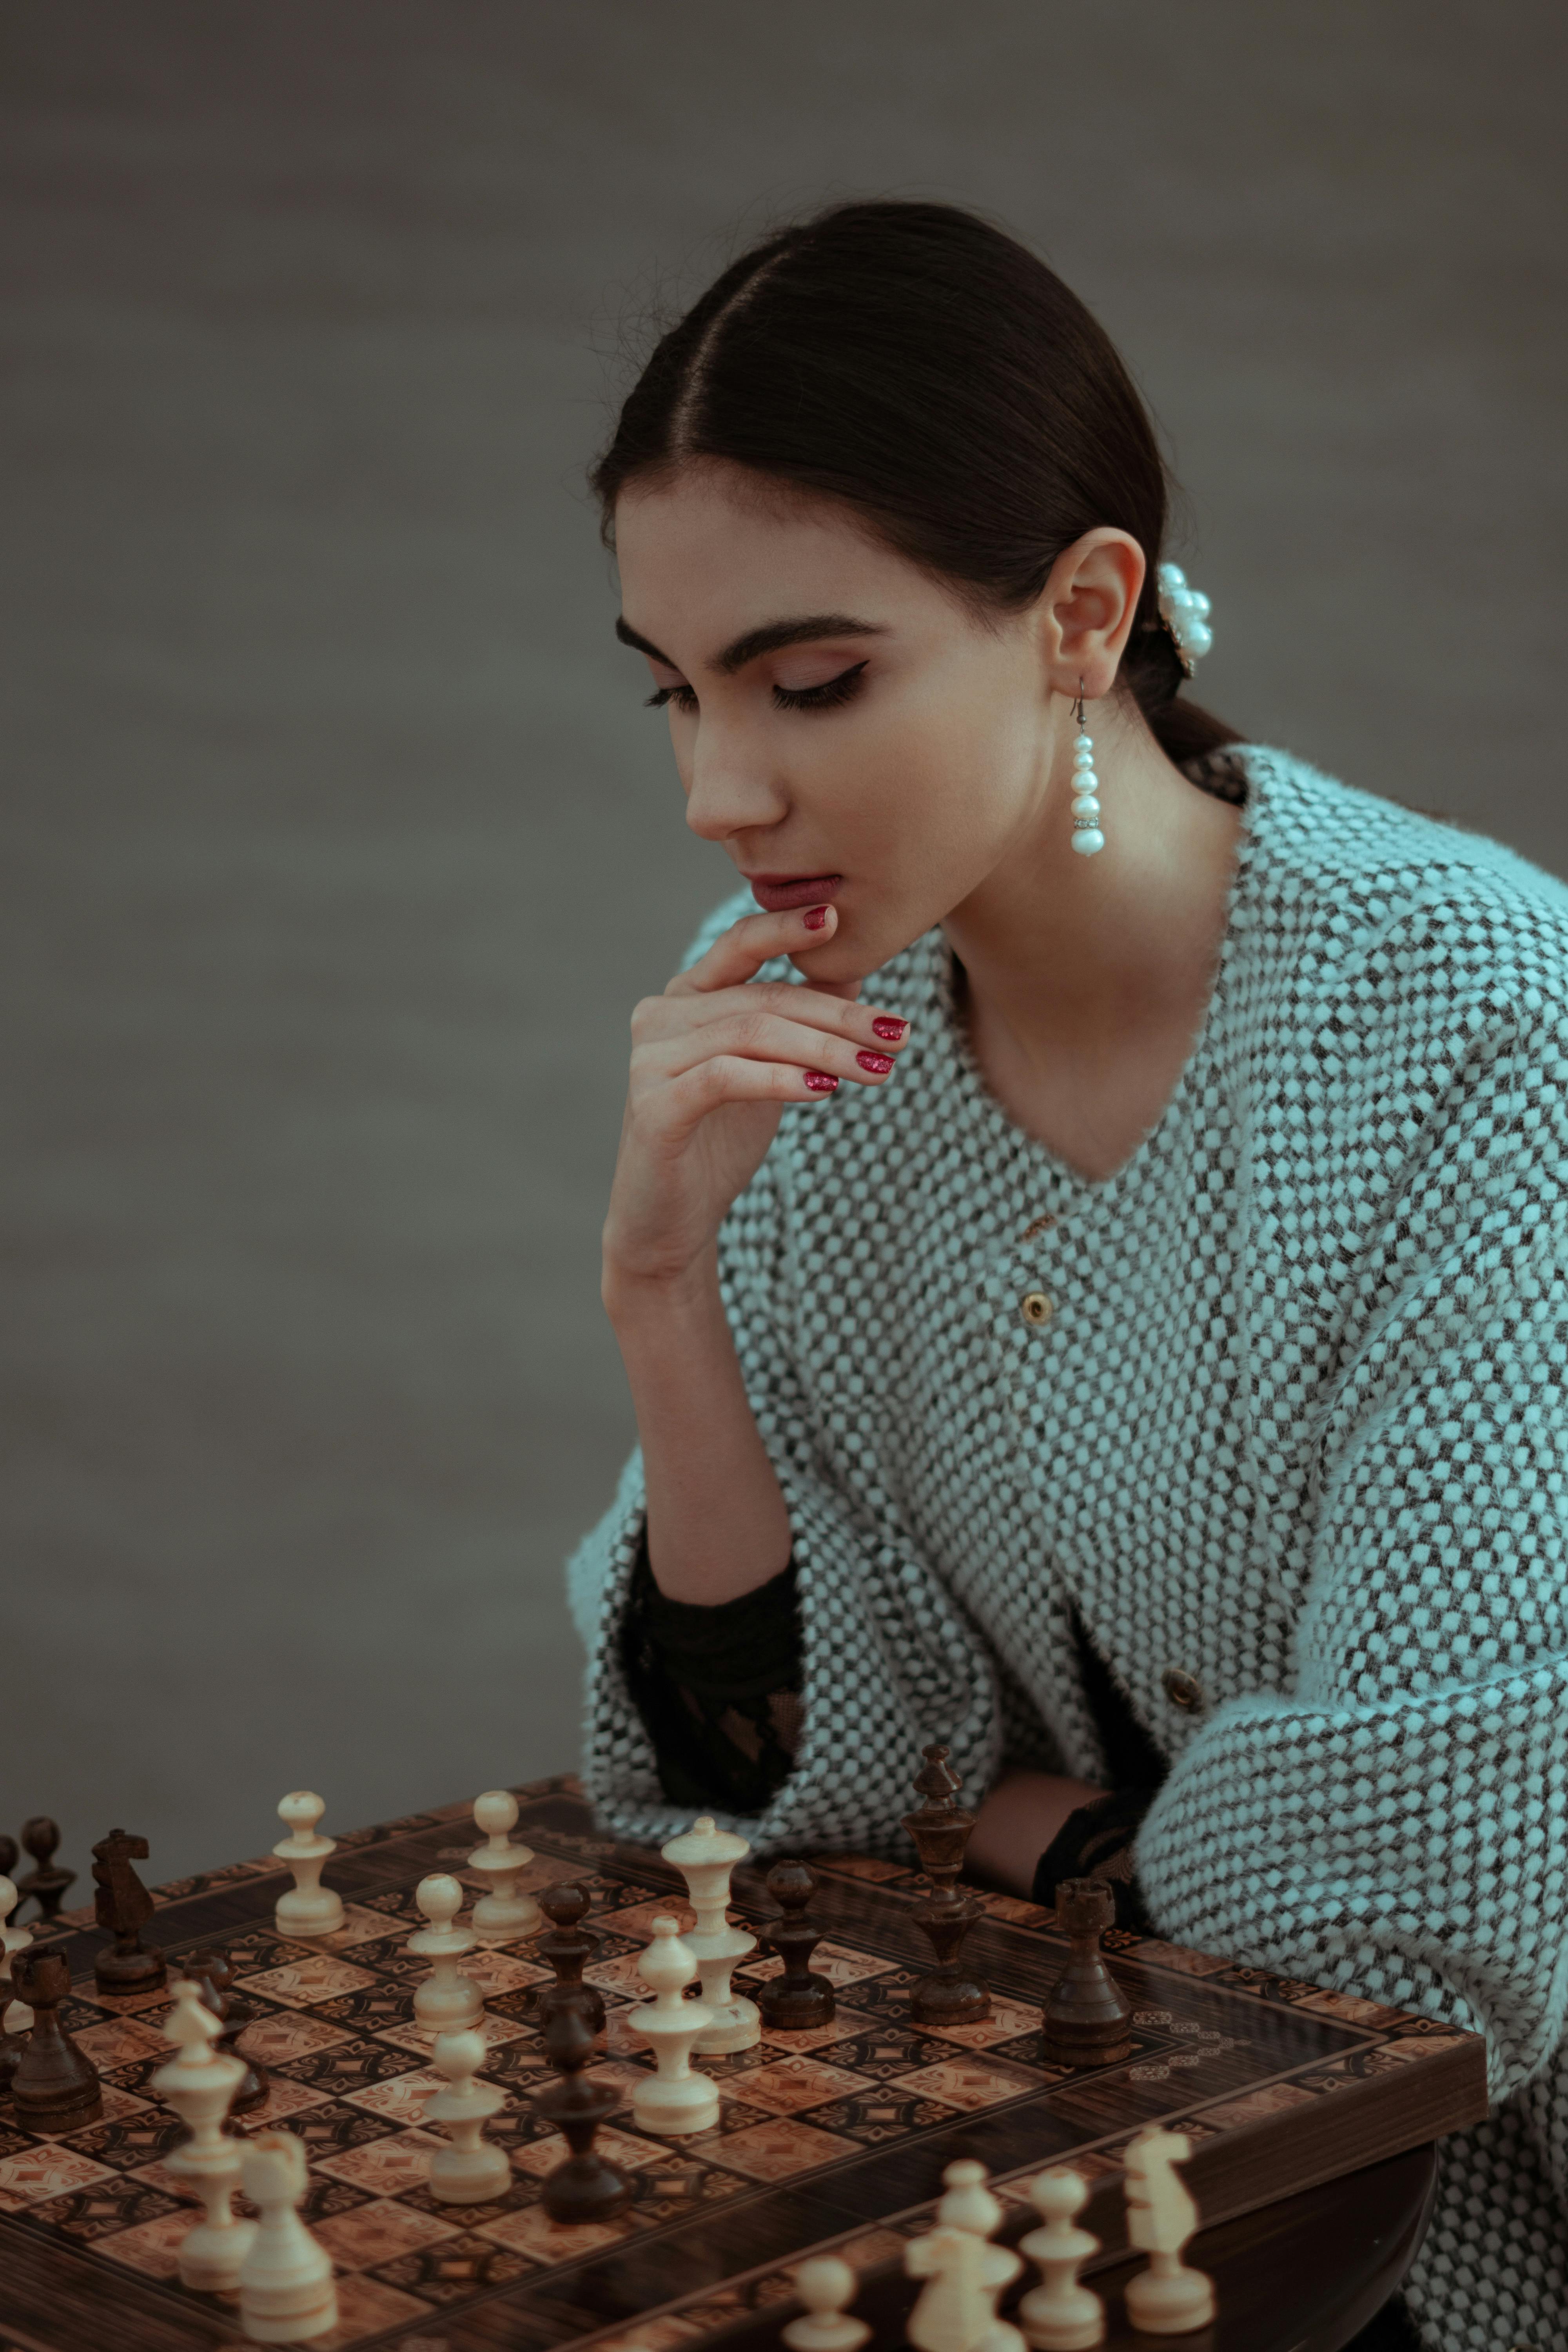 Woman playing chess thinking of next move Stock Photo - Alamy